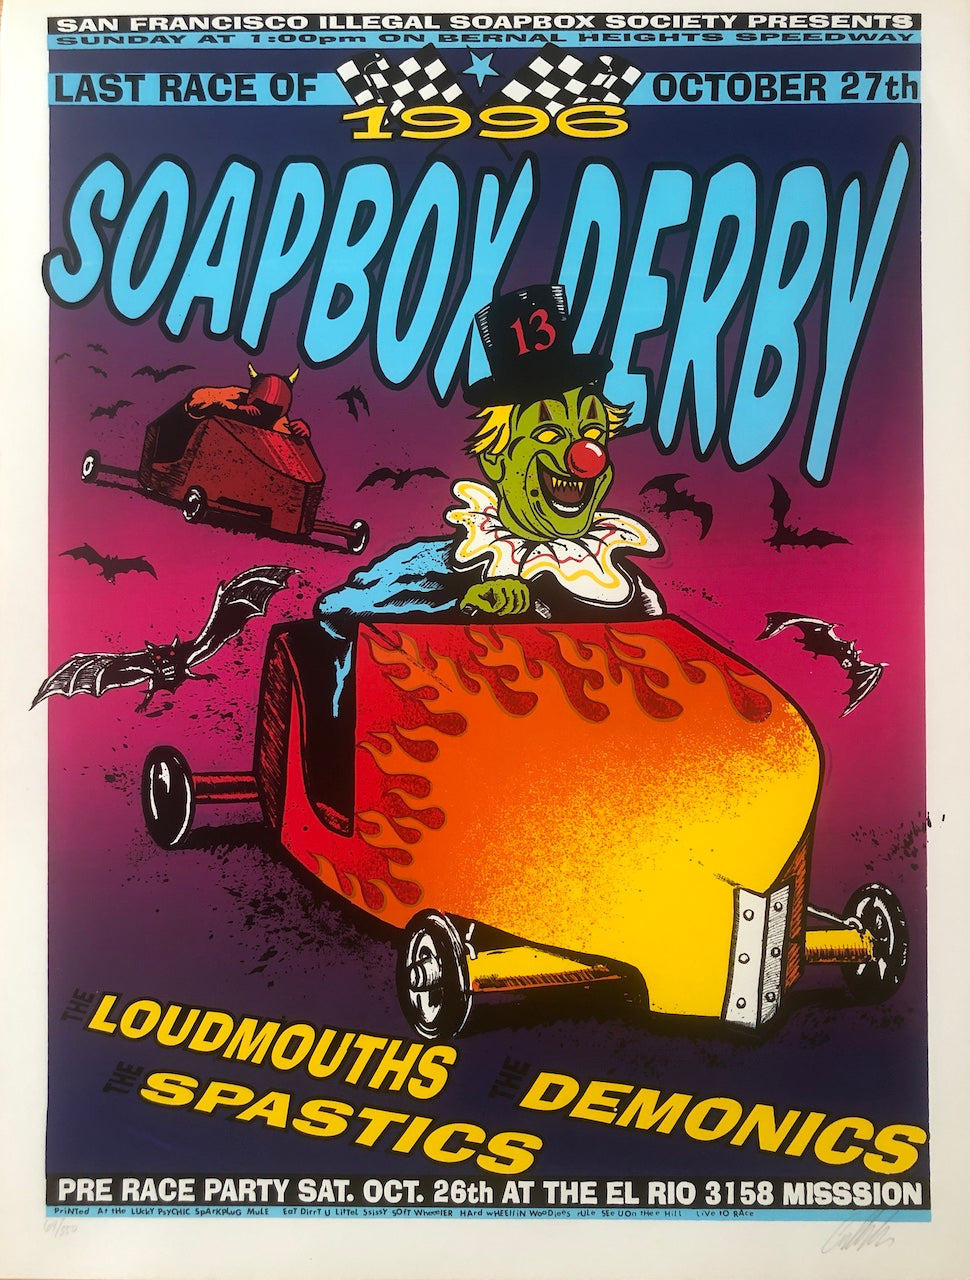 SOAPBOX DERBY 1996 SAN FRANCISCO